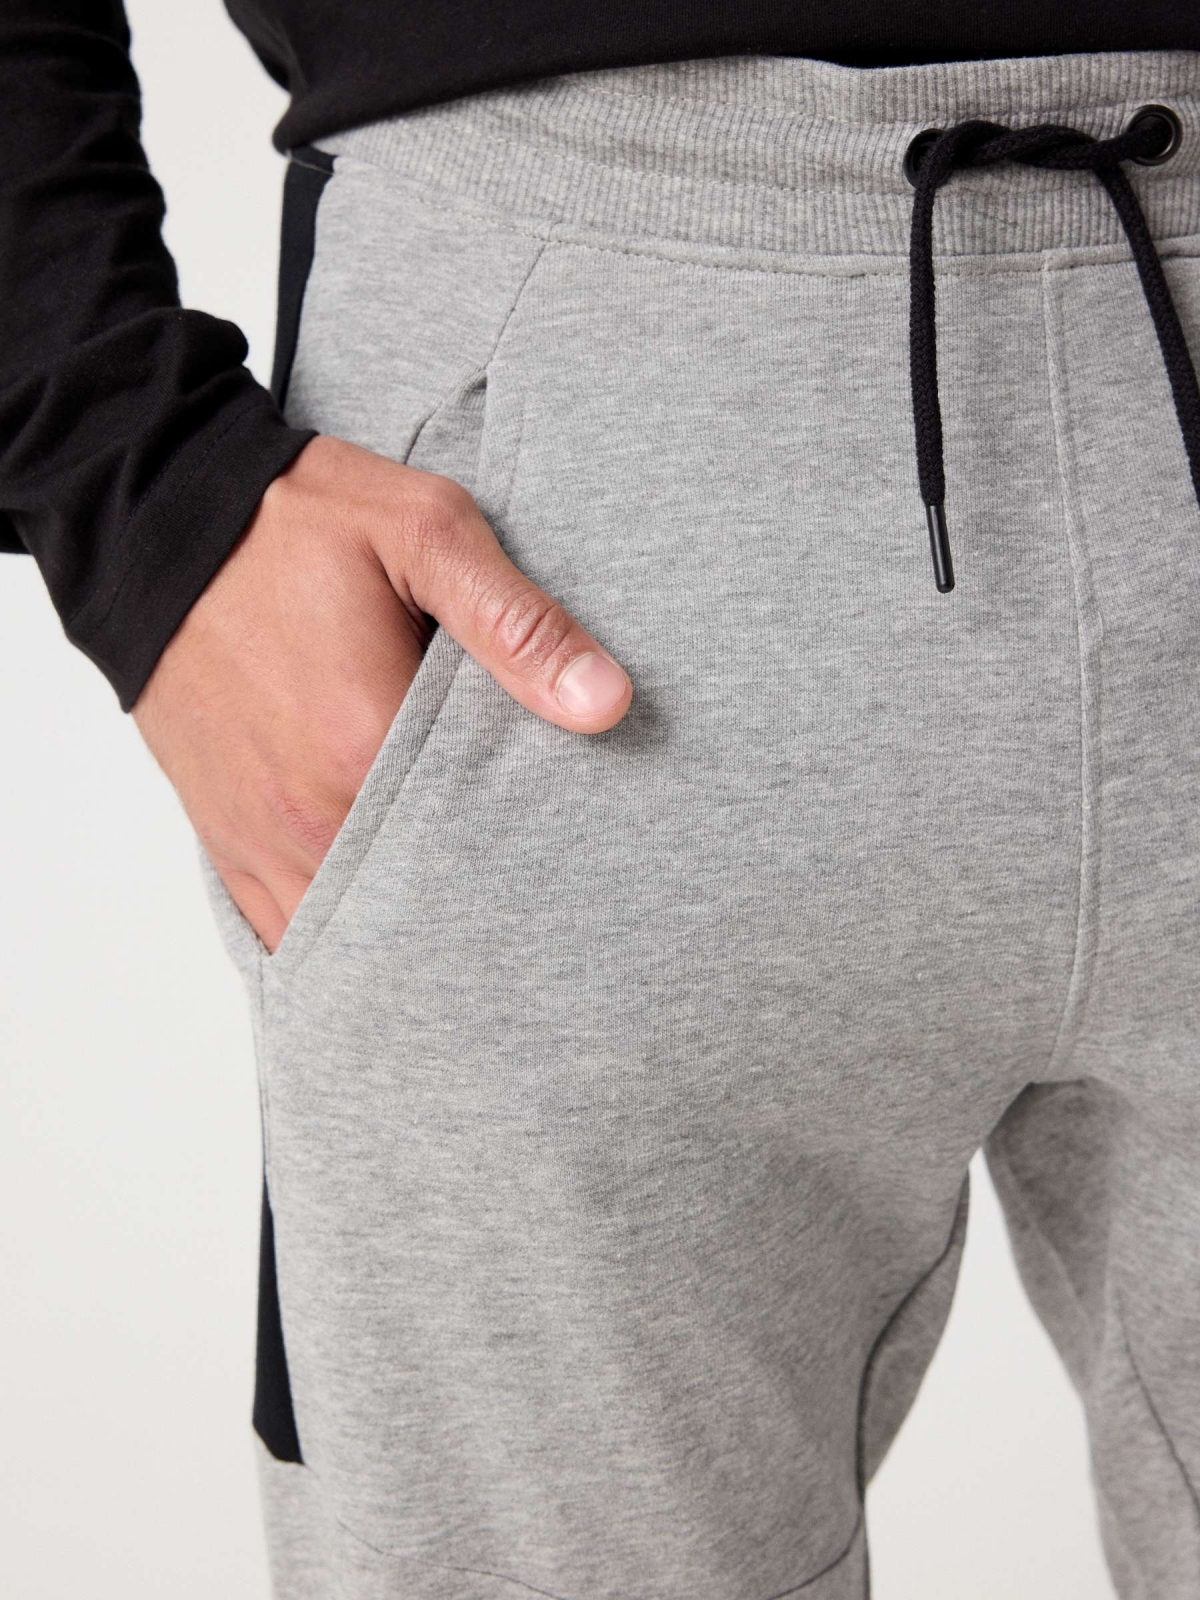 Sport jogger pants grey detail view